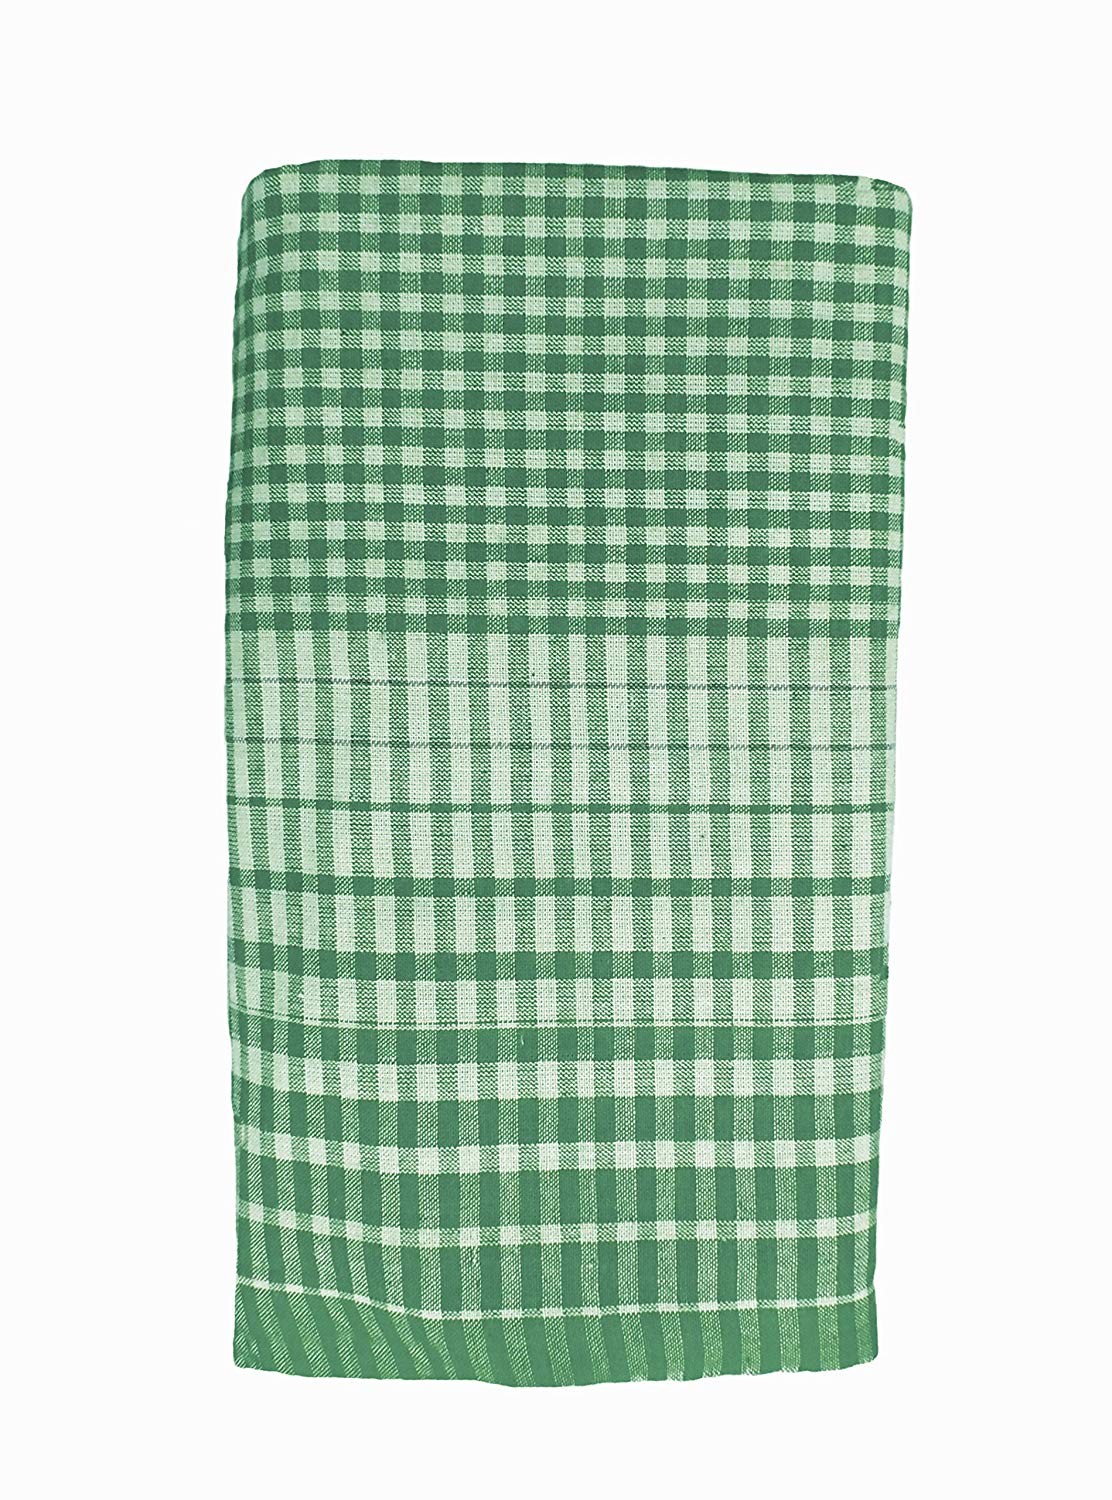 Cotton-Bath-Towel-Handloom-Large-Gamcha-Towels-Green-B078NBJGHW.jpg